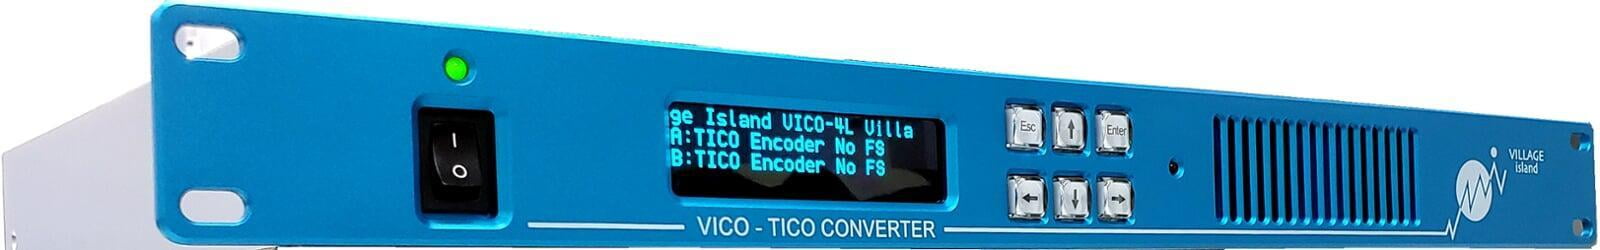 Village Island - VICO series with JPEG XS